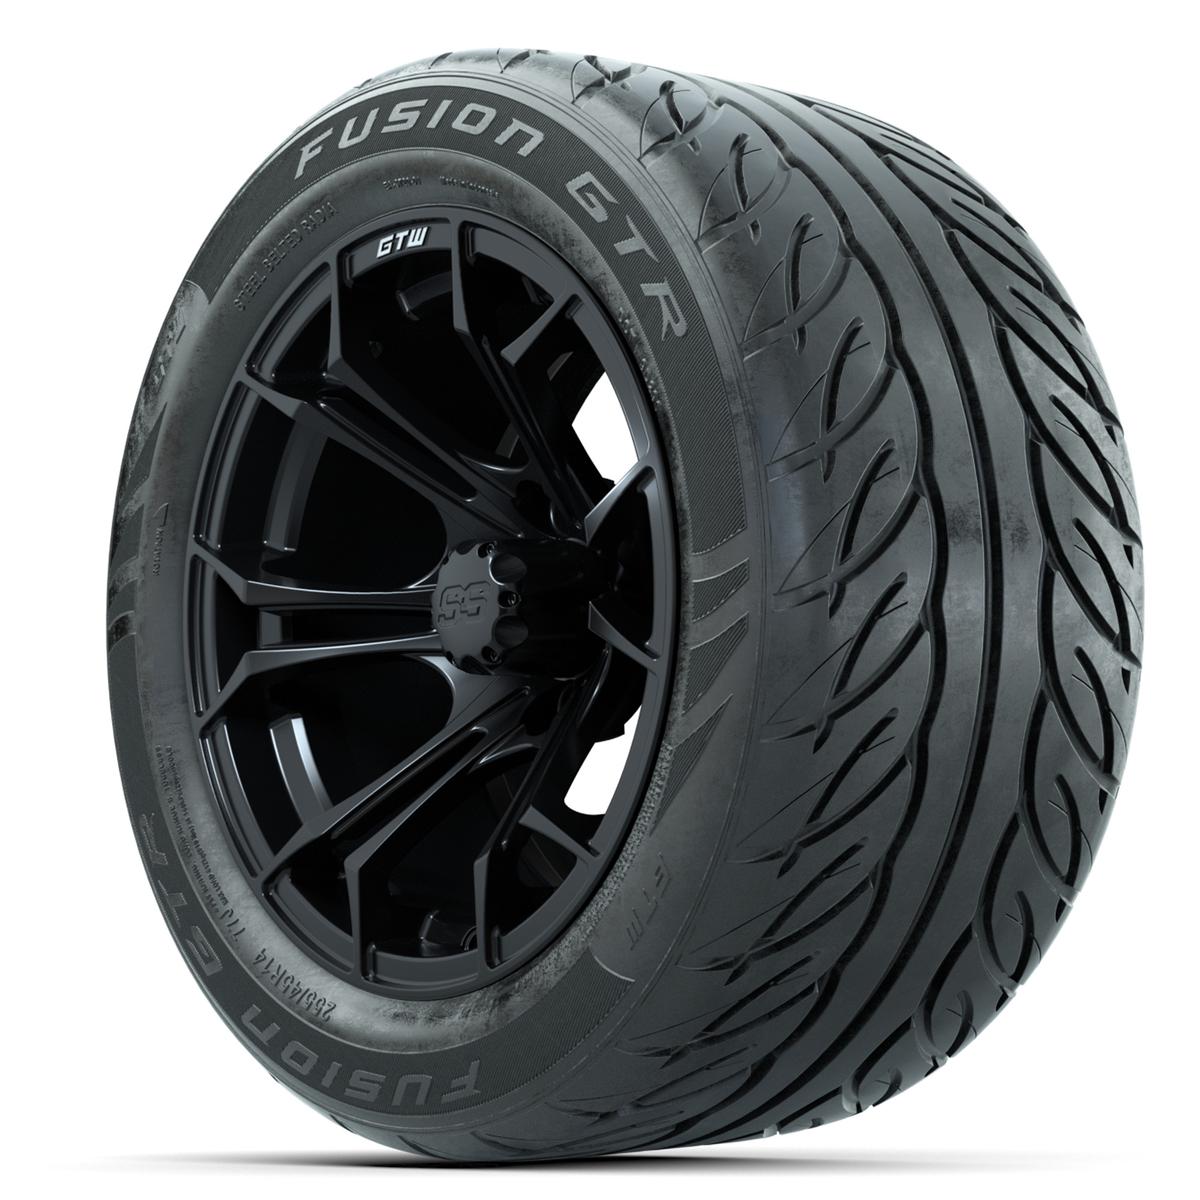 GTW Spyder Matte Black 14 in Wheels with 255/45-R14 Fusion GTR Street Tires – Full Set